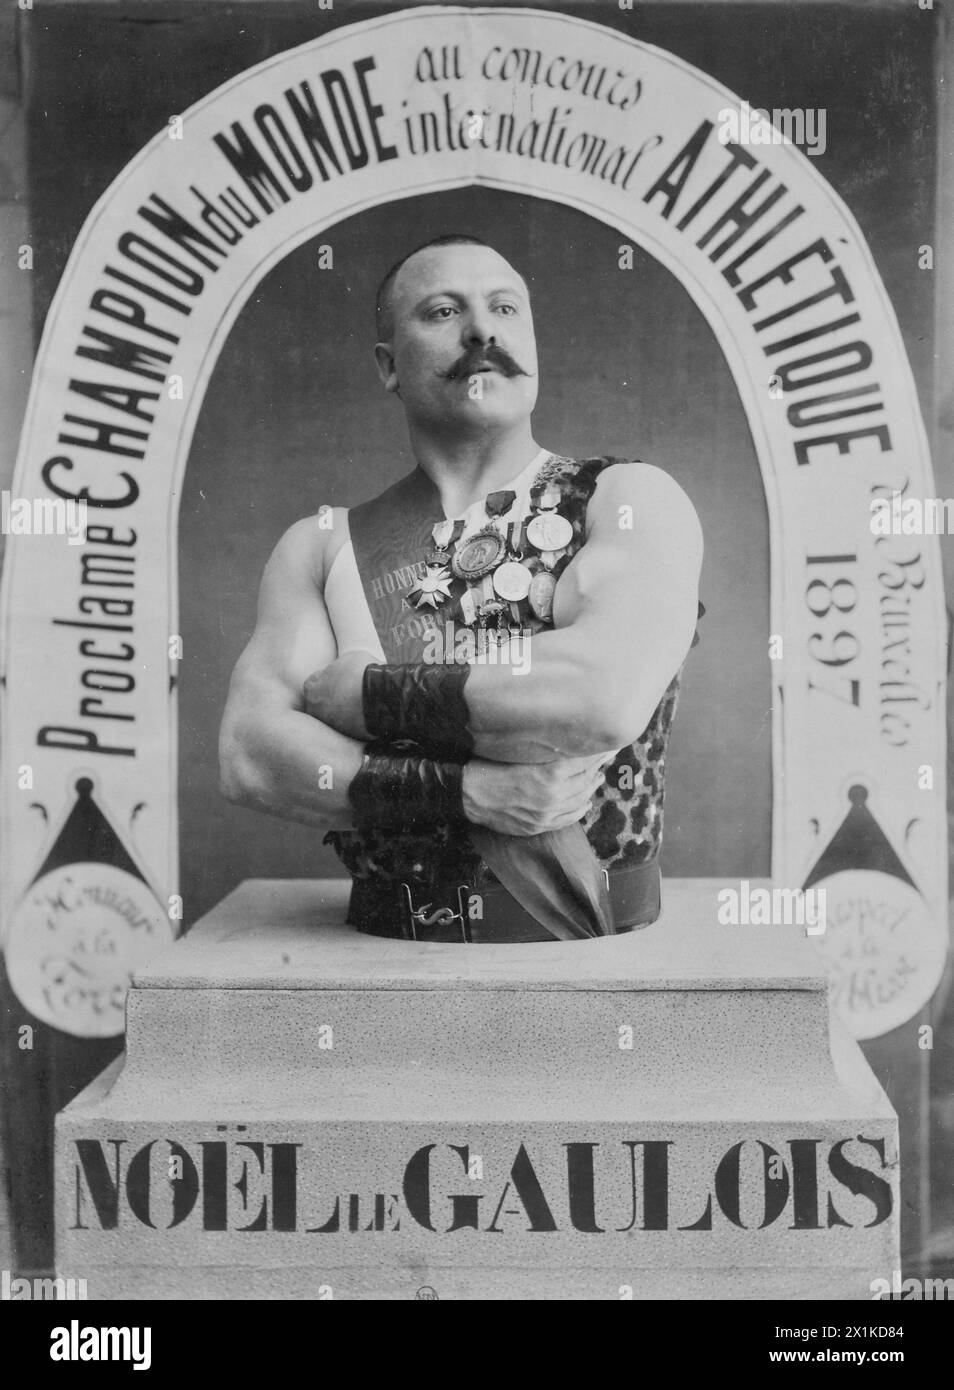 Jules Beau Foto von Noel le Gaulois Weltmeister Strongman - 1897 Stockfoto